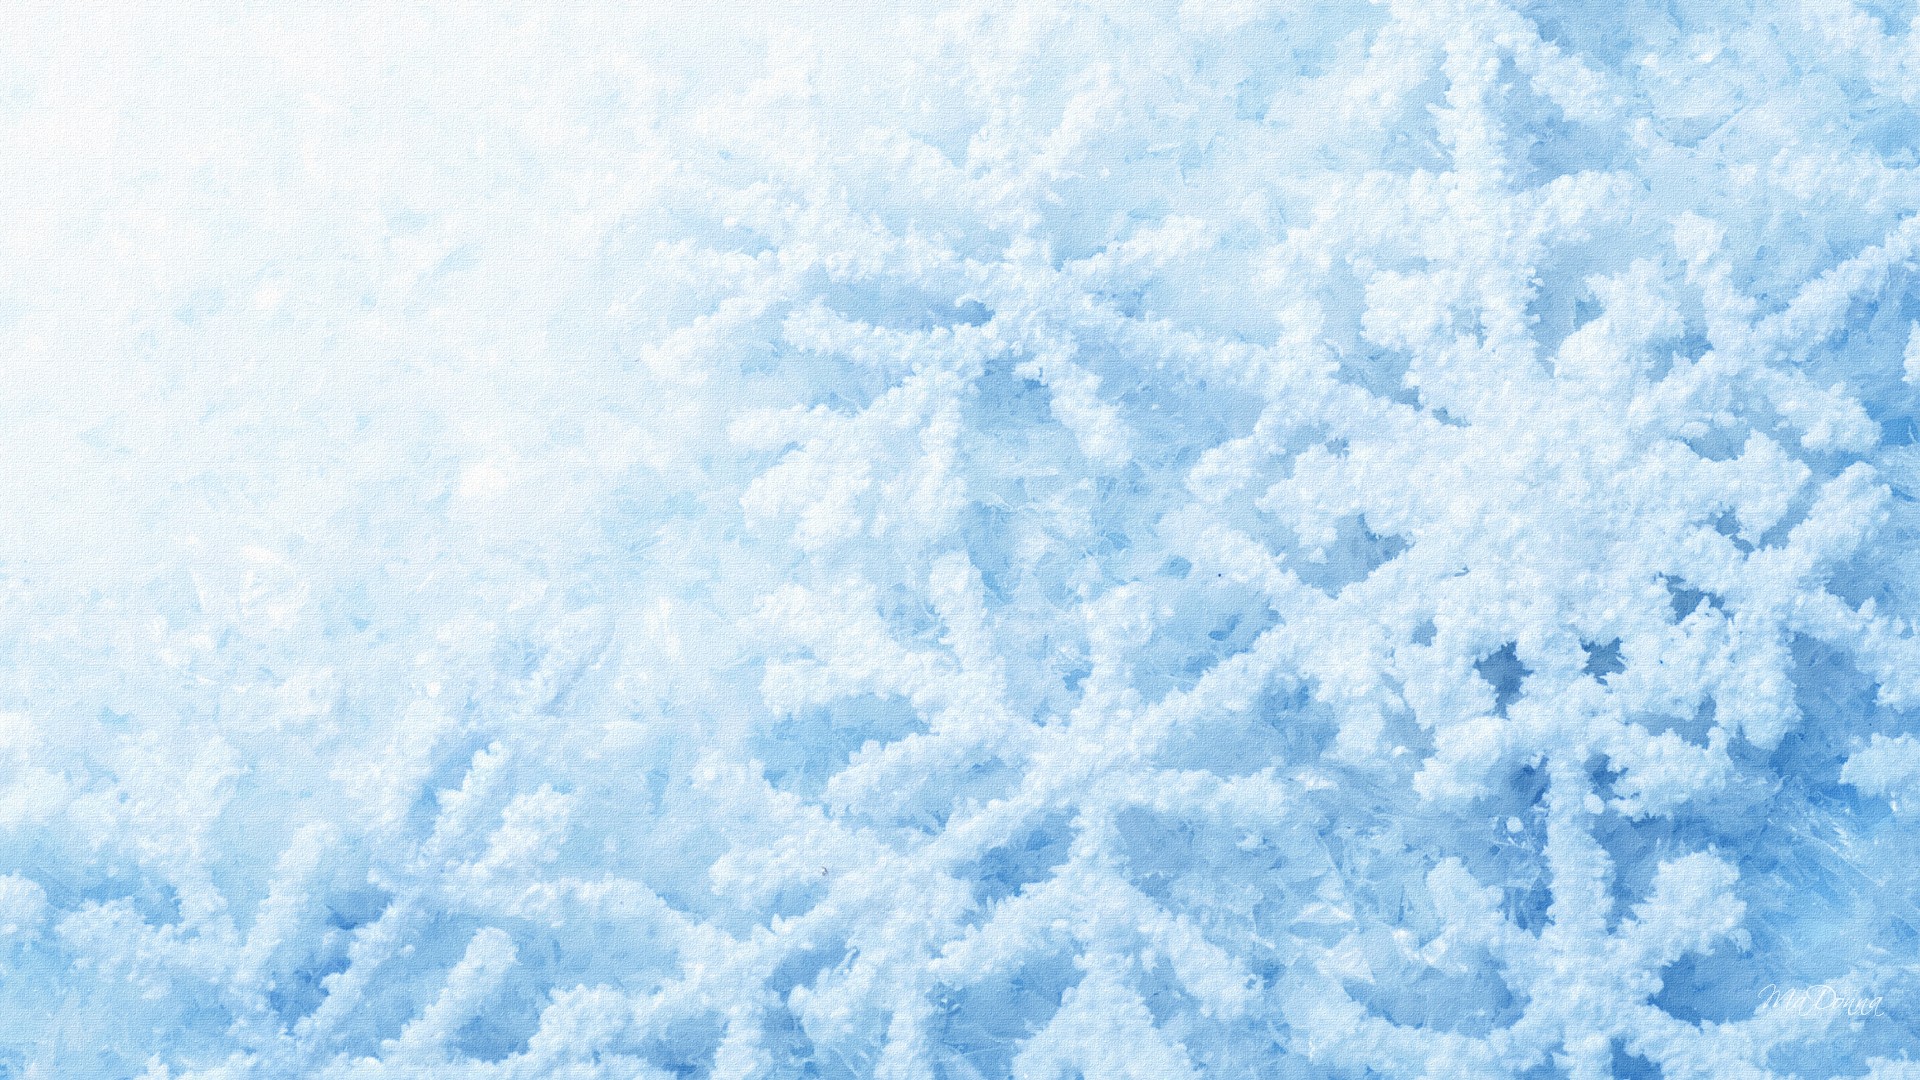 Snowflake 1080p Wallpaper High Definition Quality